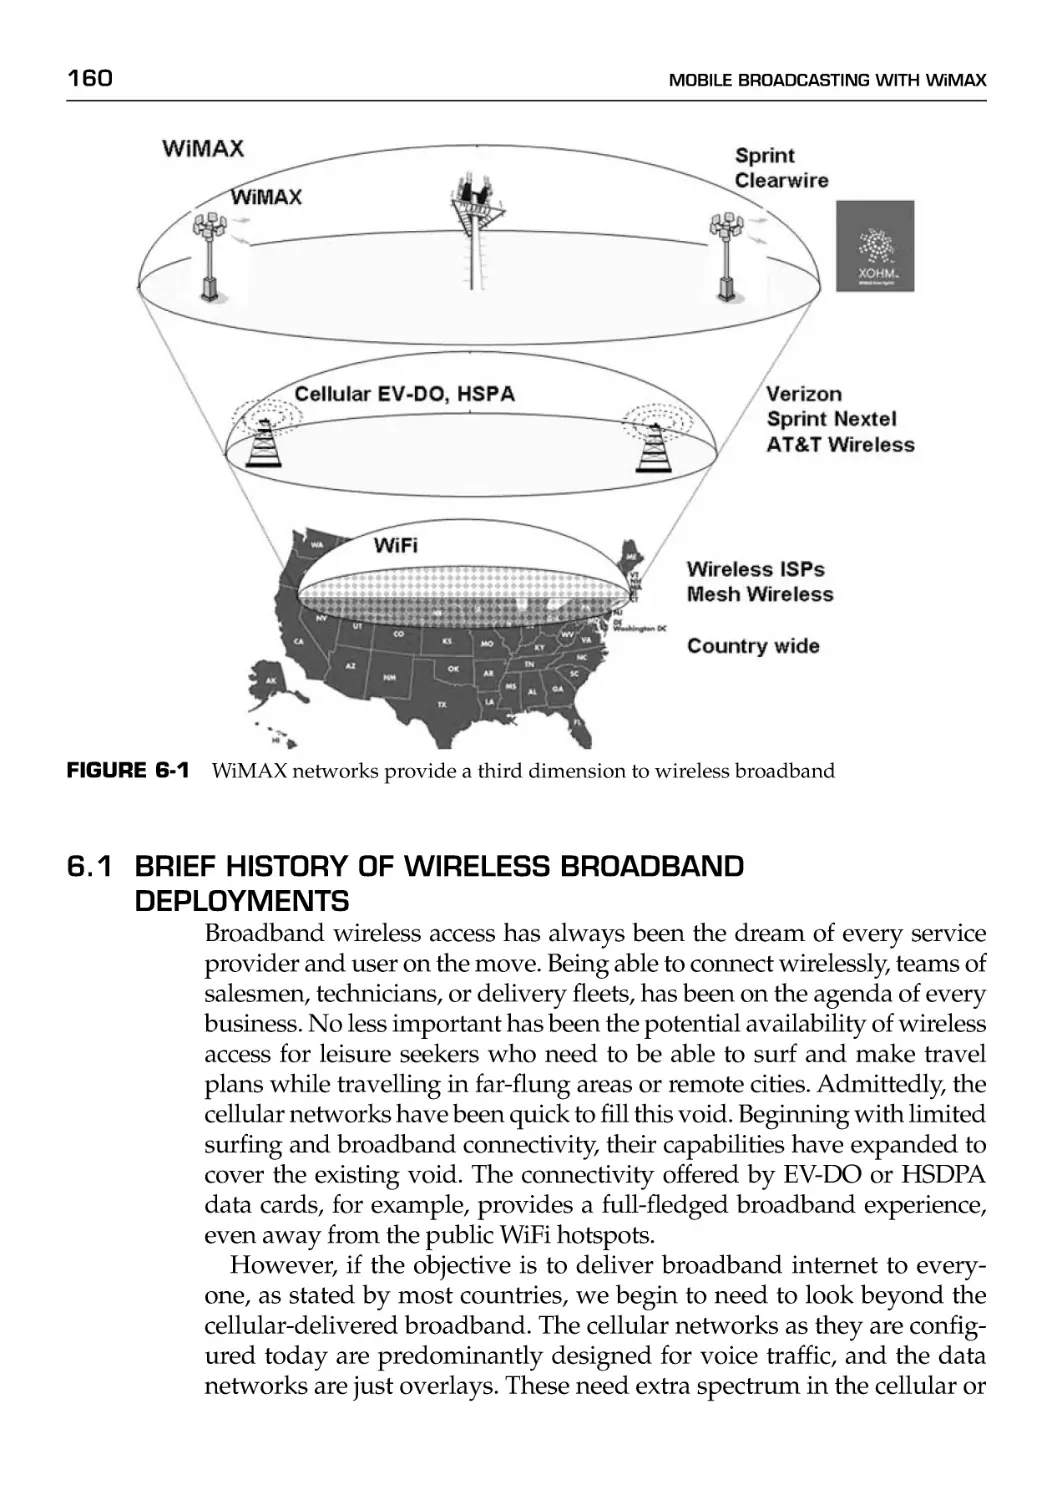 6.1 Brief History of Wireless Broadband Deployments